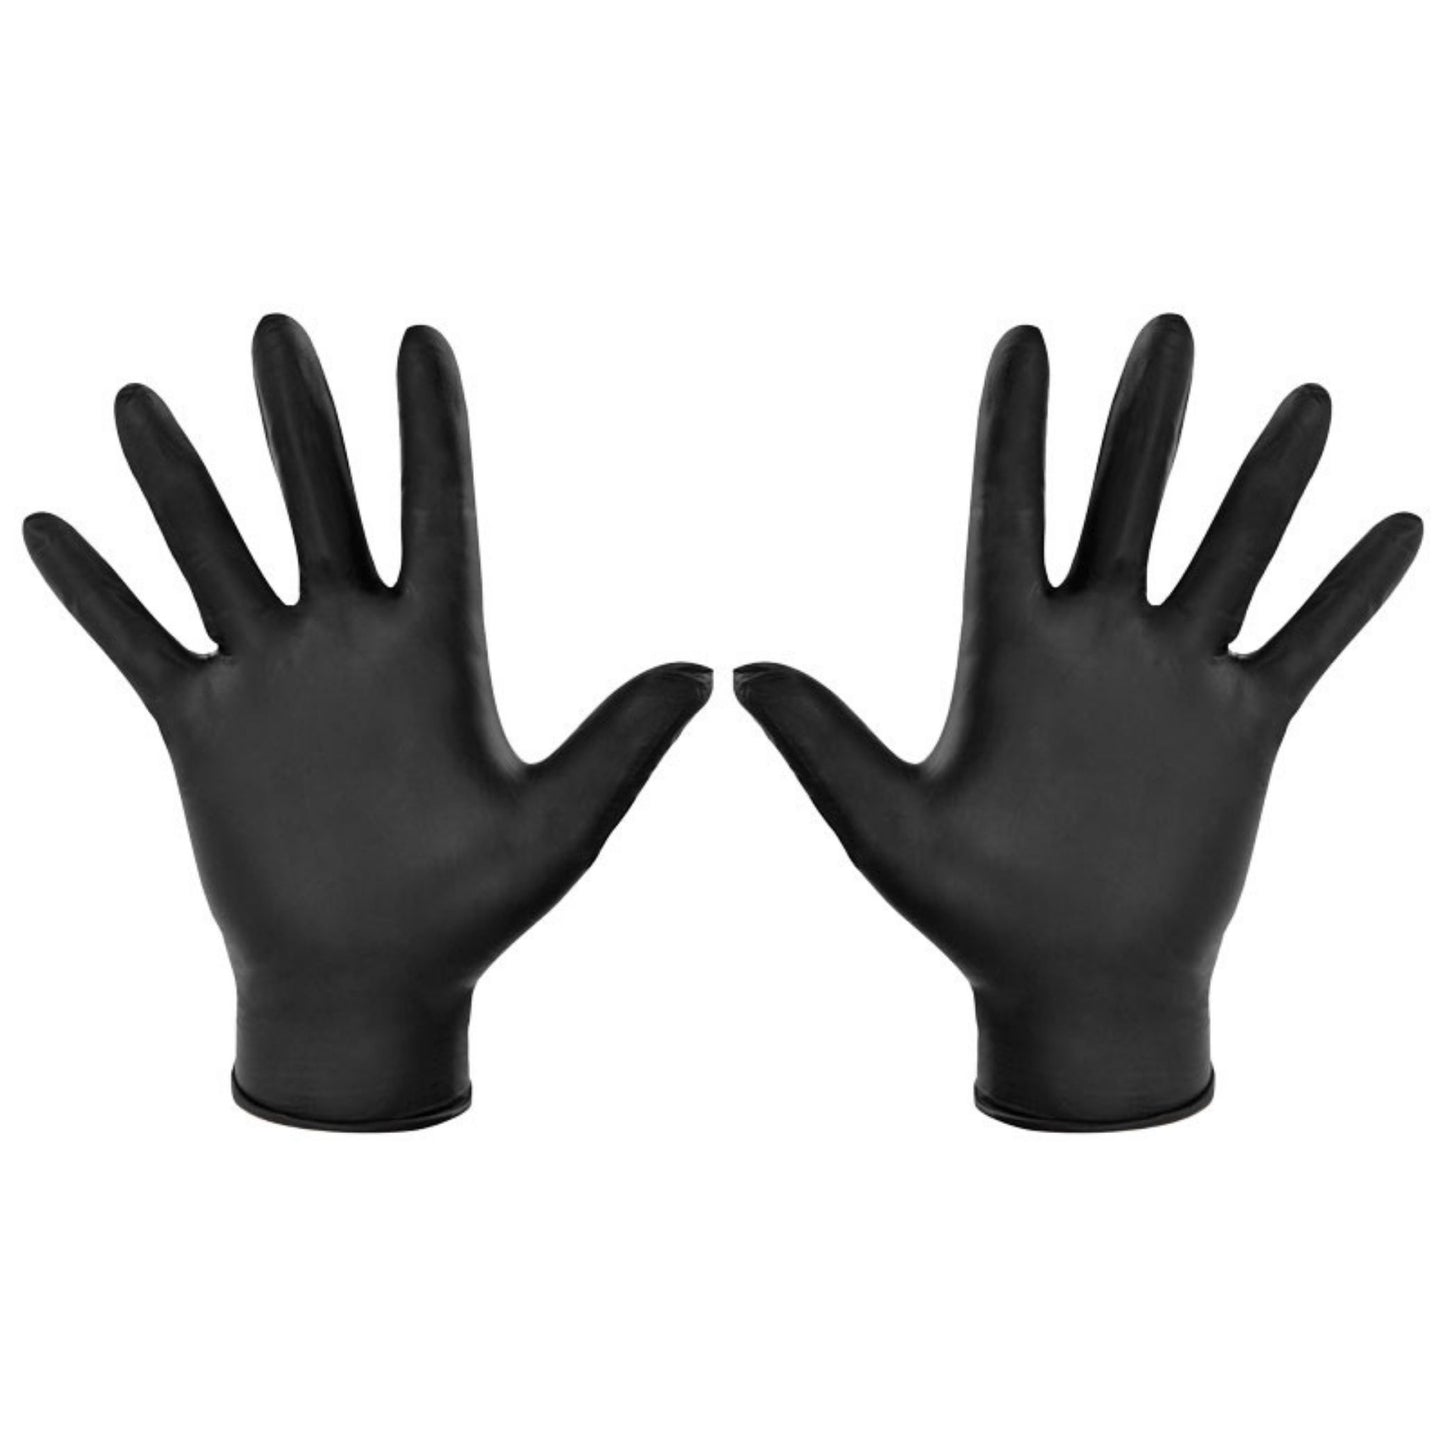 Gloves-Nitril-PF-Black-Extra Large 10x 100 CT